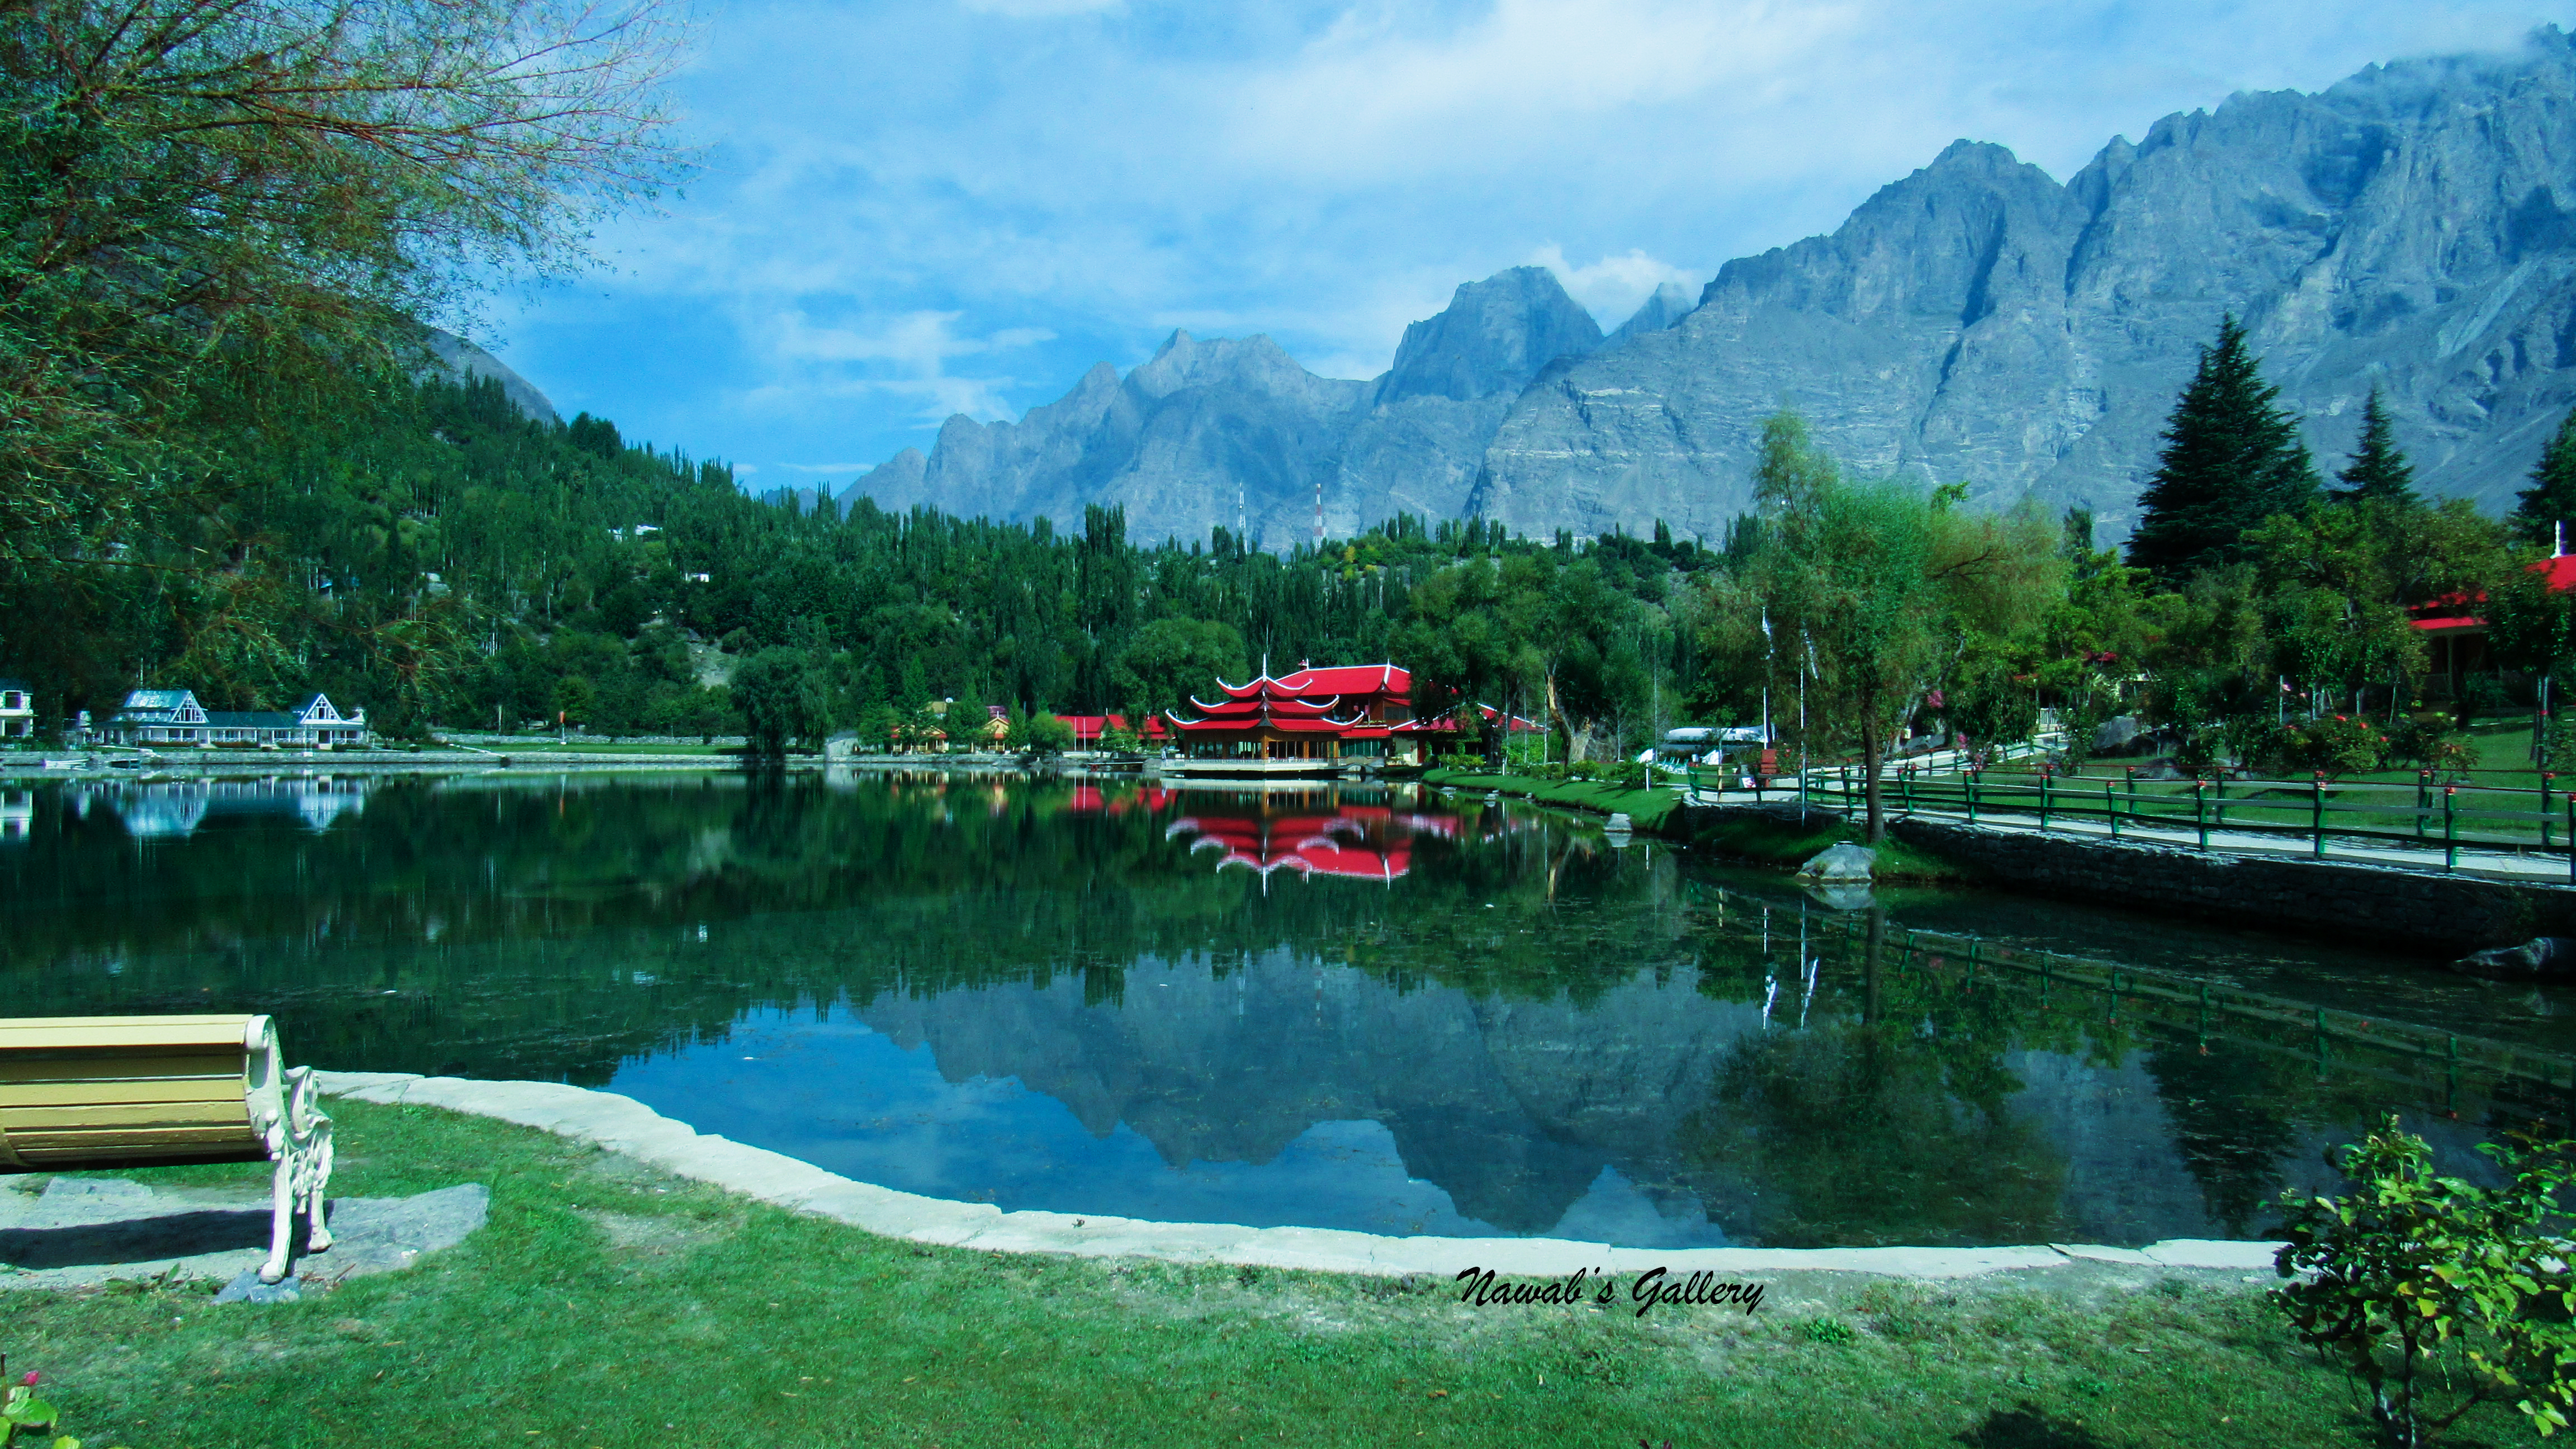 Day 10: Shangrilla to Gilgit